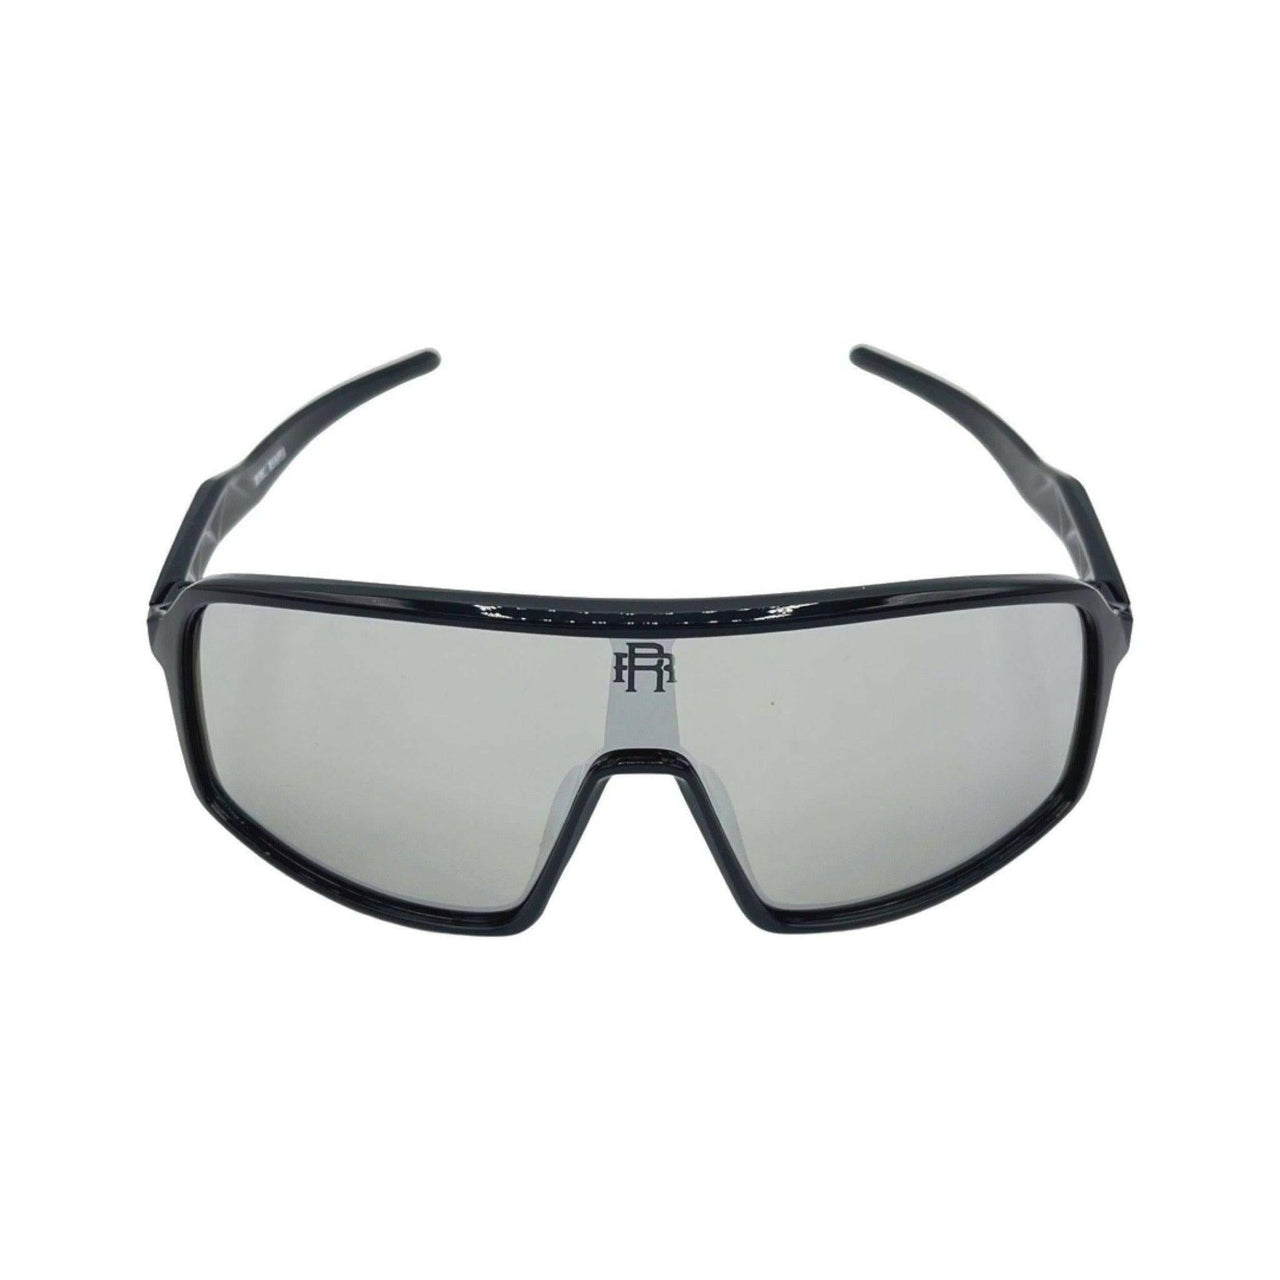 Yeti Silver Mirrored Polarized Lens Sunglasses